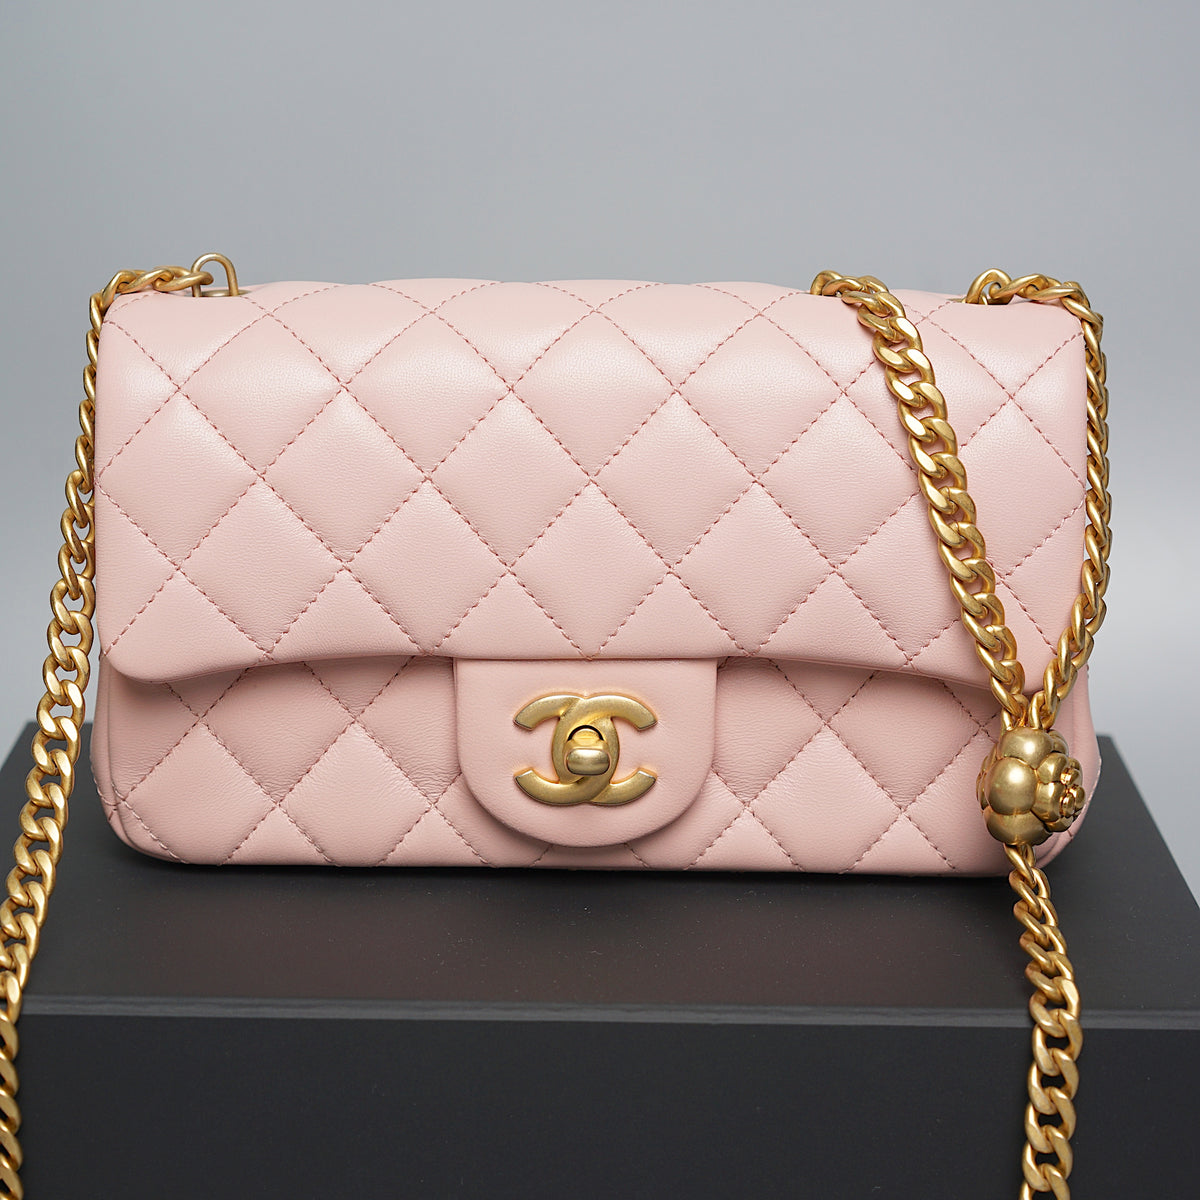 A closer look at the Chanel 23S Sweet Camellia Mini Flap Bag with adju